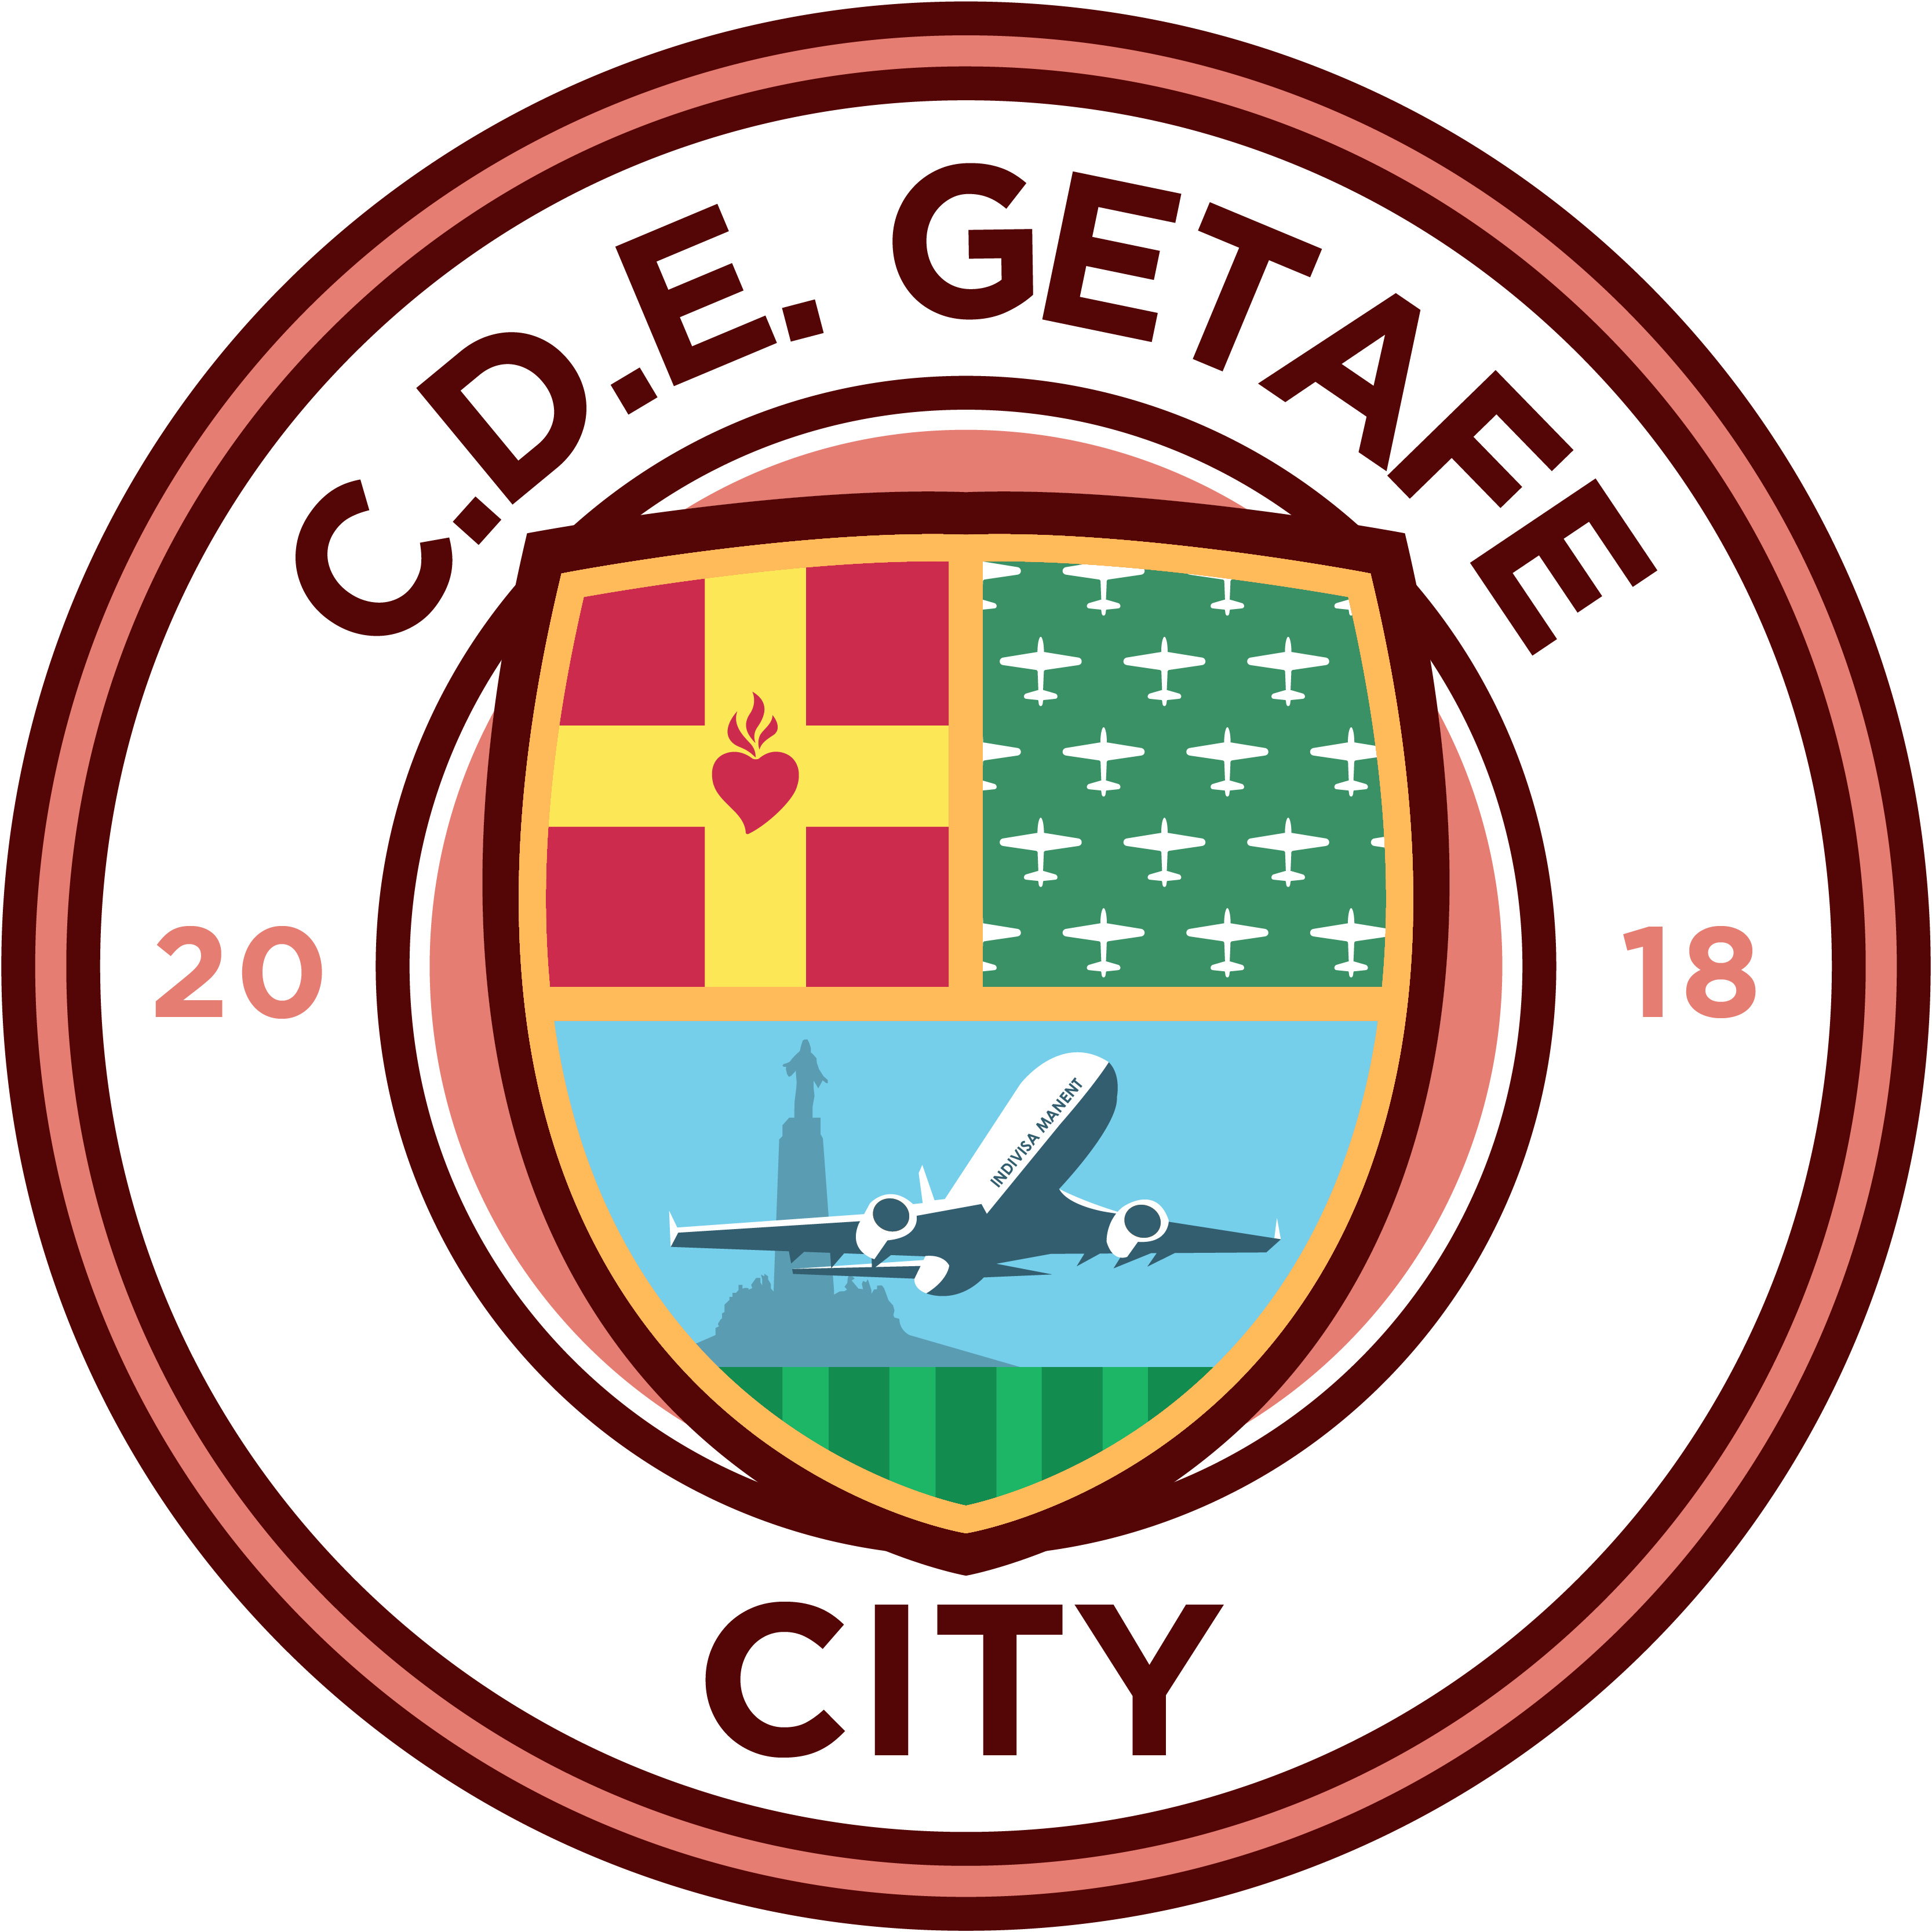 CD Getafe City